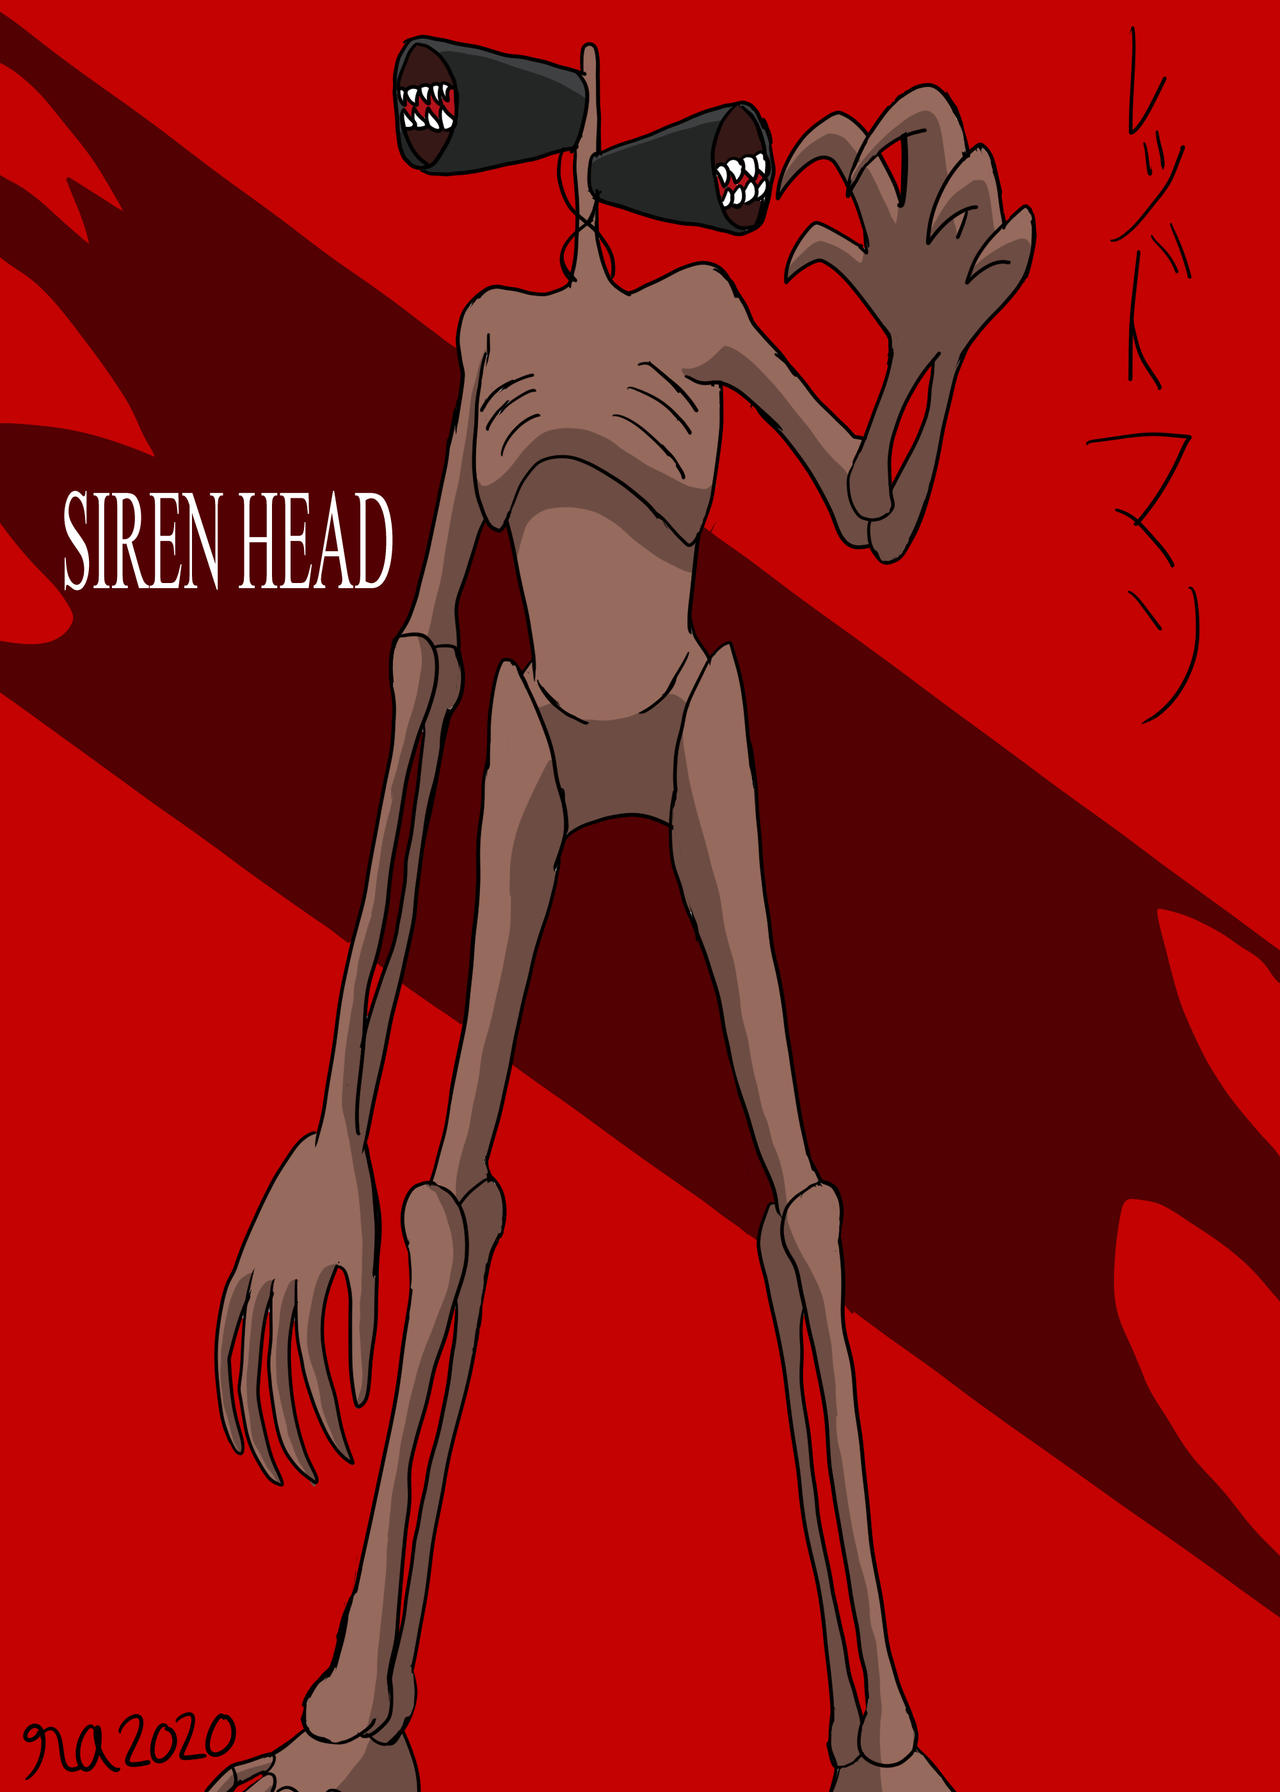 Siren Head by unoriginaI on DeviantArt